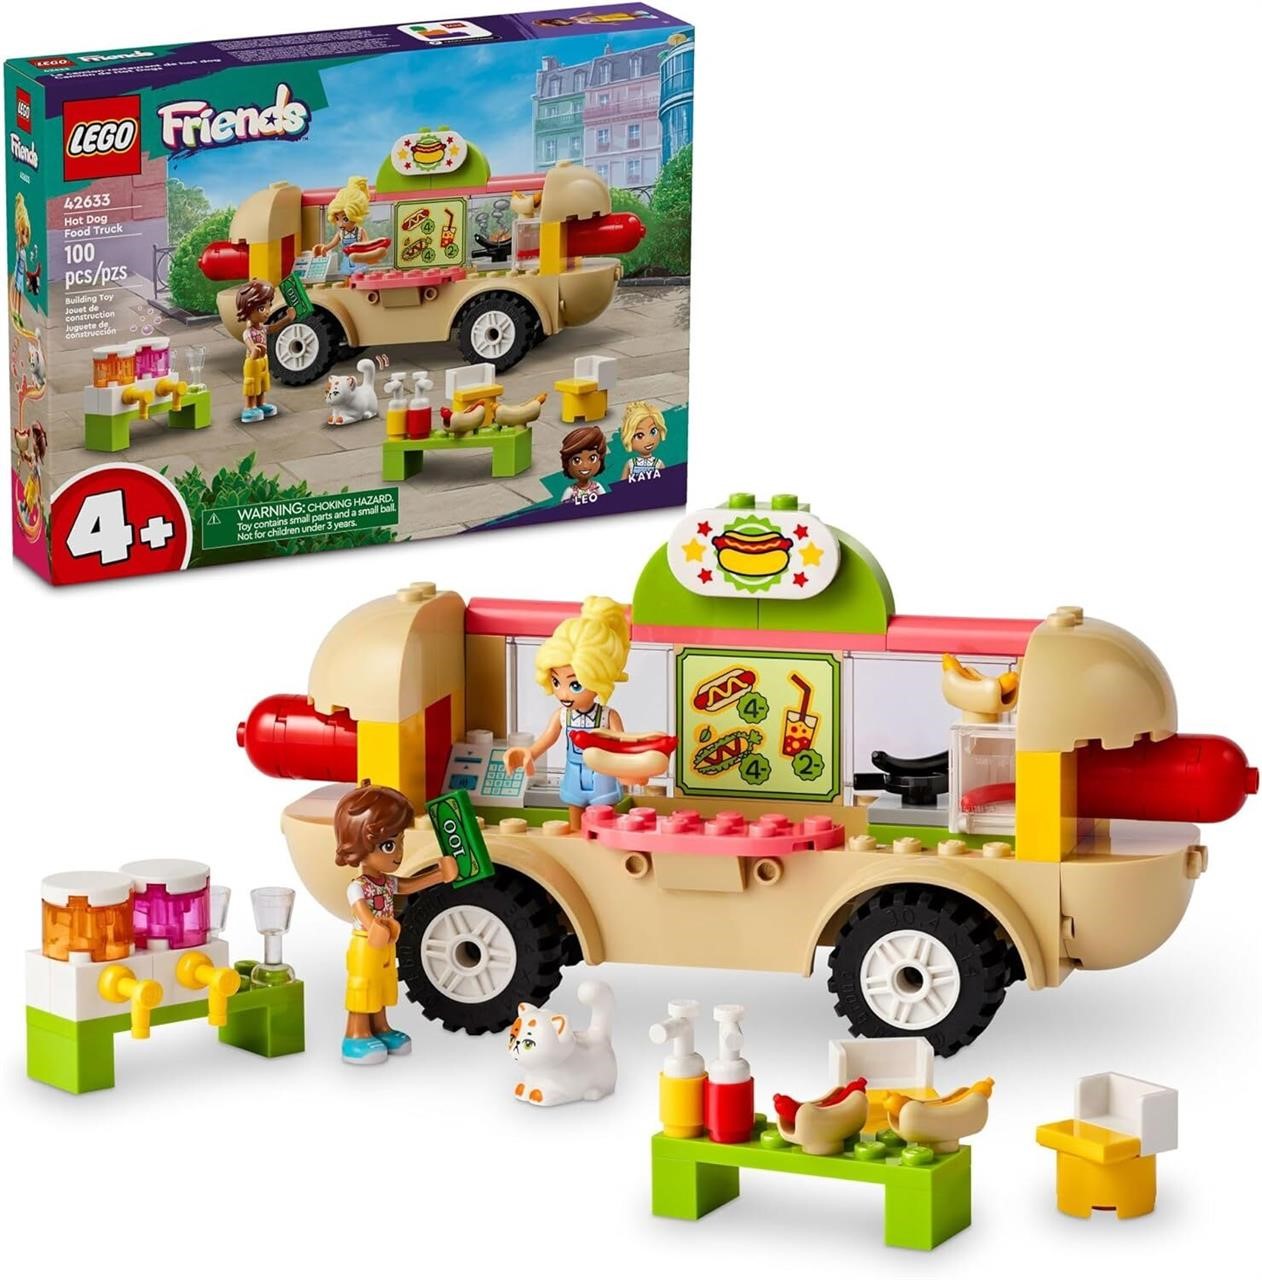 LEGO Friends Hot Dog Food Truck Toy  42633